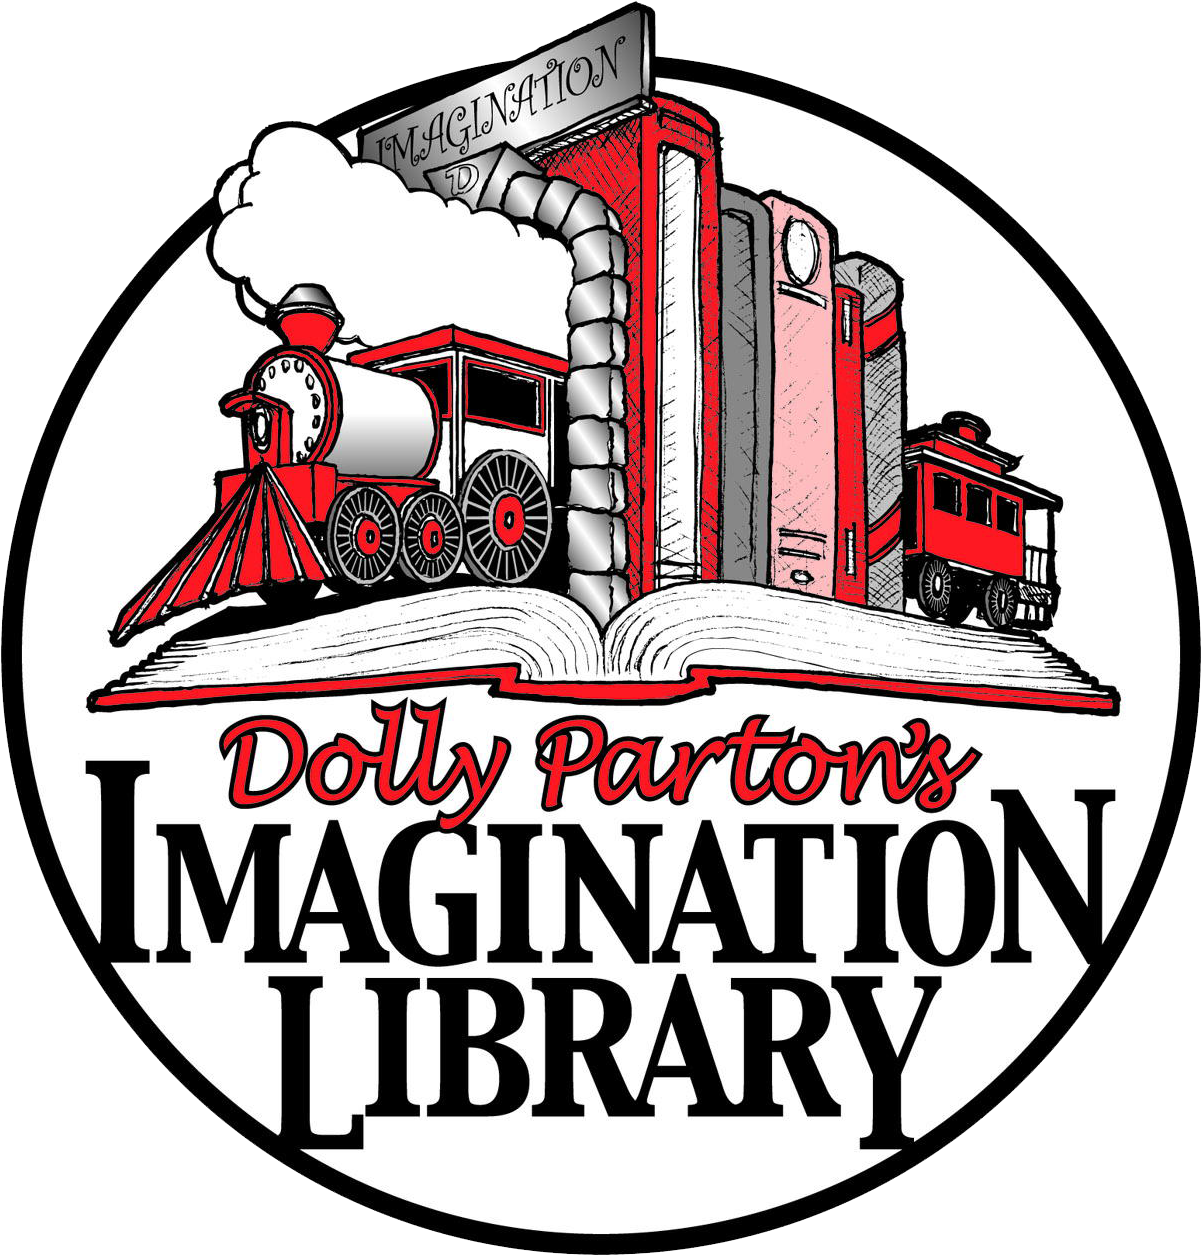 Dolly Parton's Imagination Library (1262x1262)